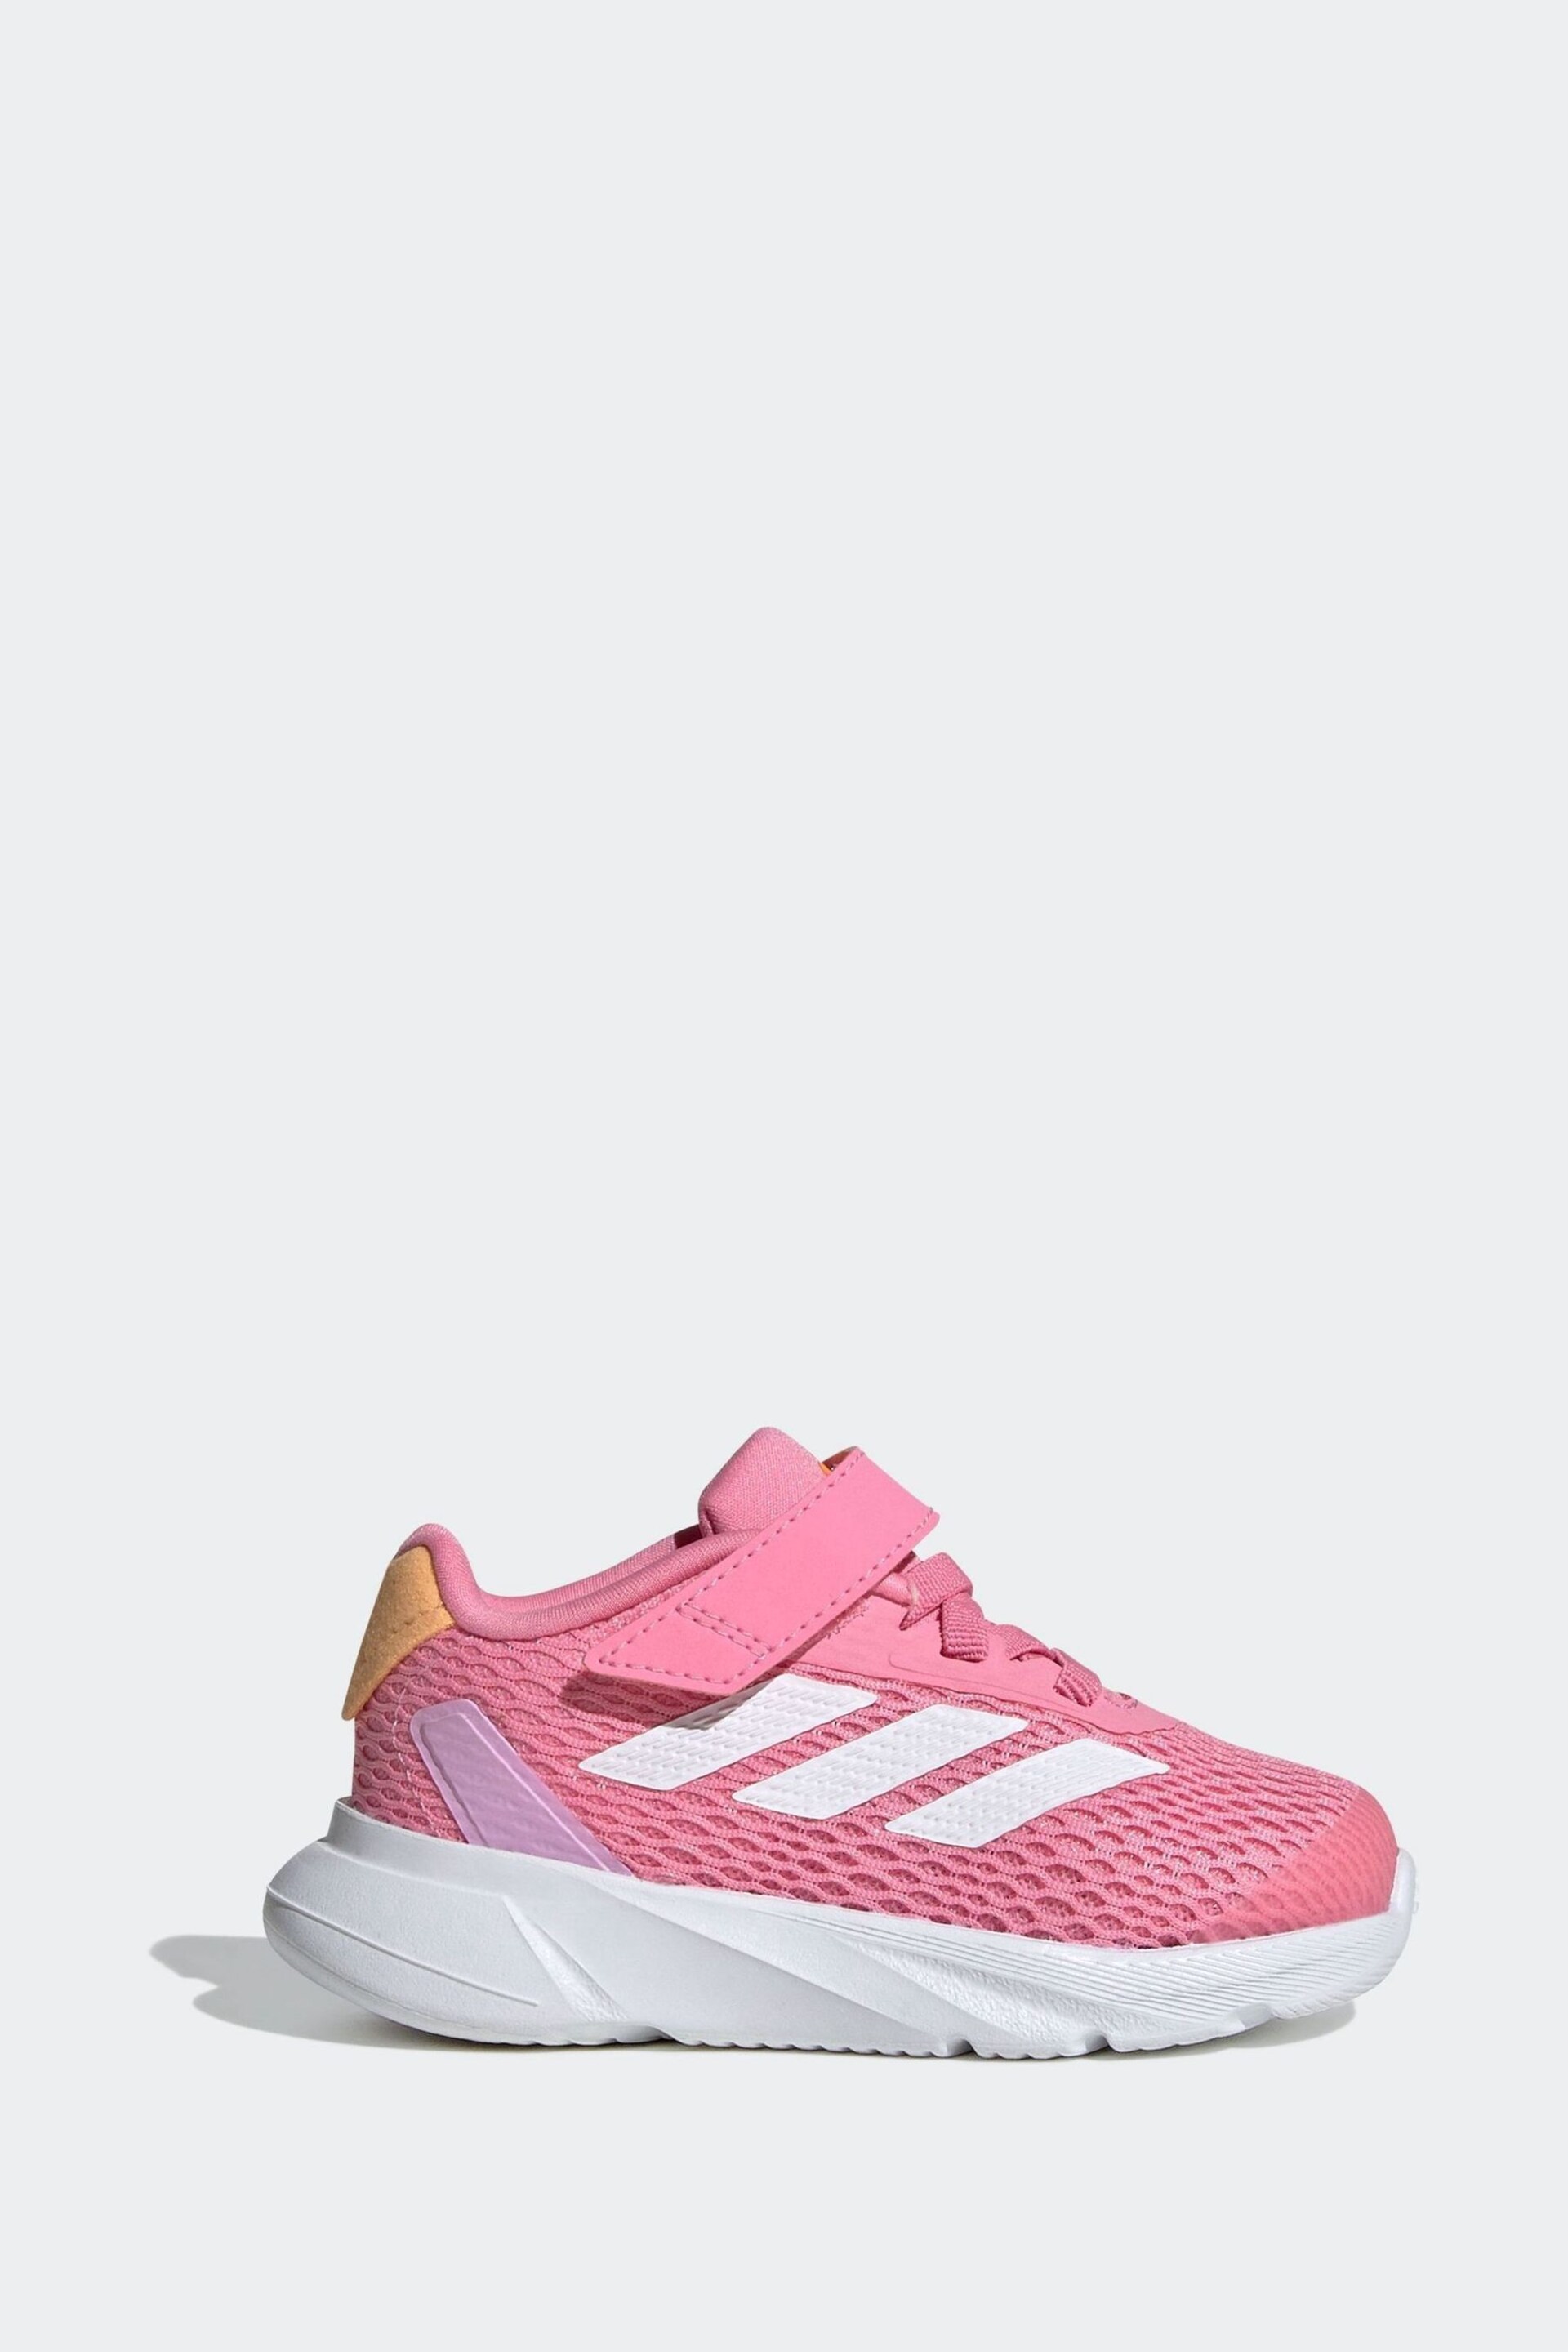 adidas Pink Duramo Trainers - Image 1 of 8